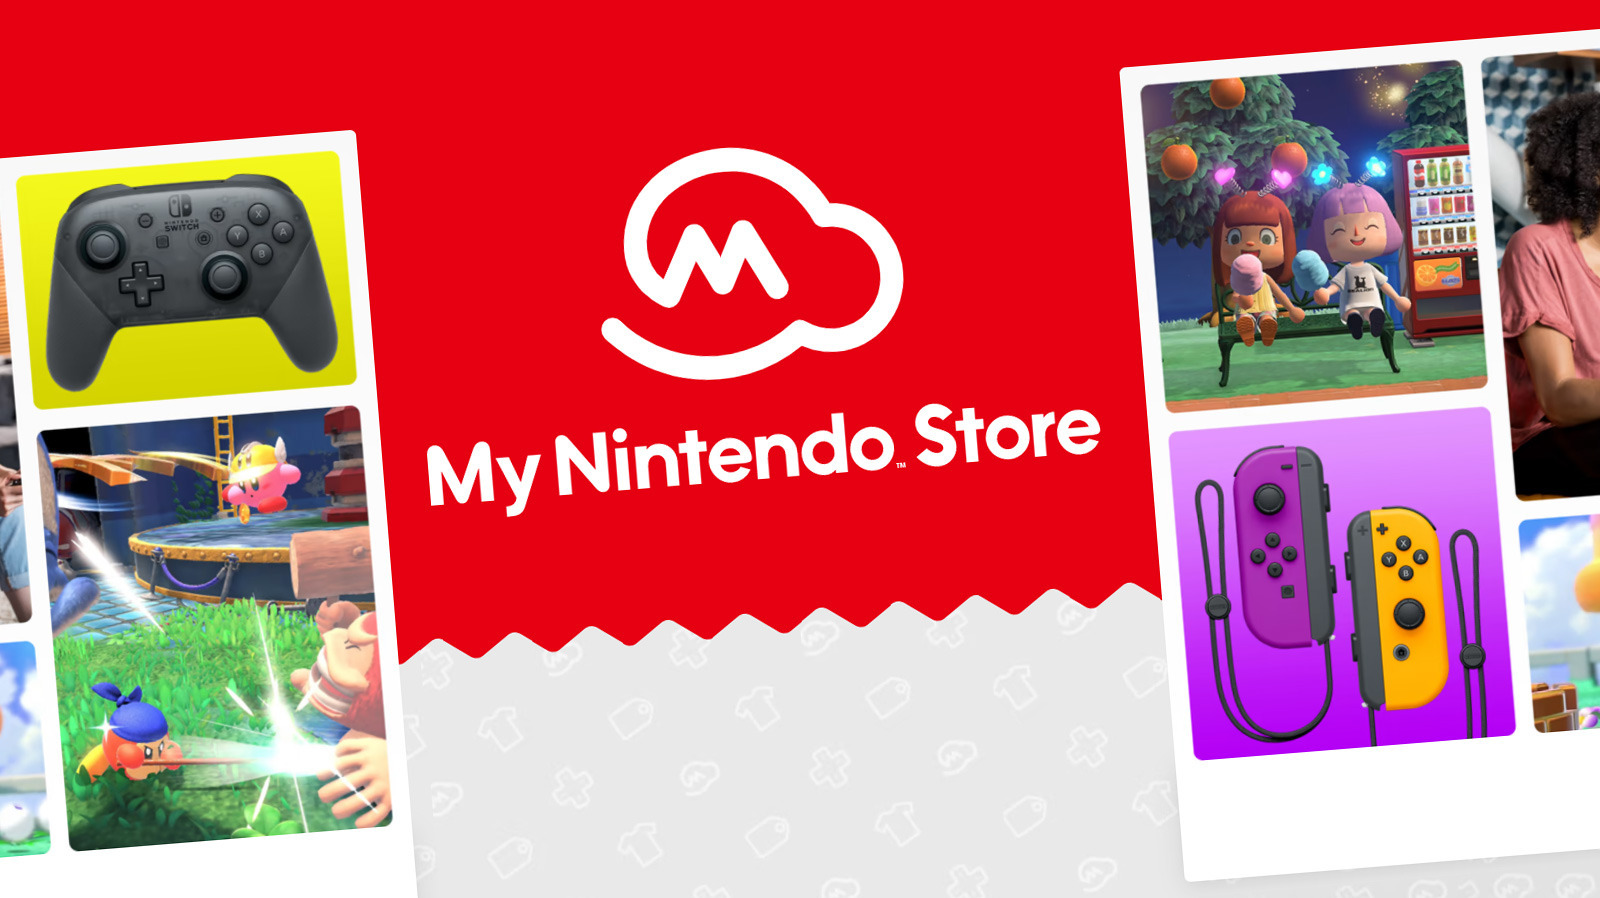 Nintendo Switch Games - My Nintendo Store